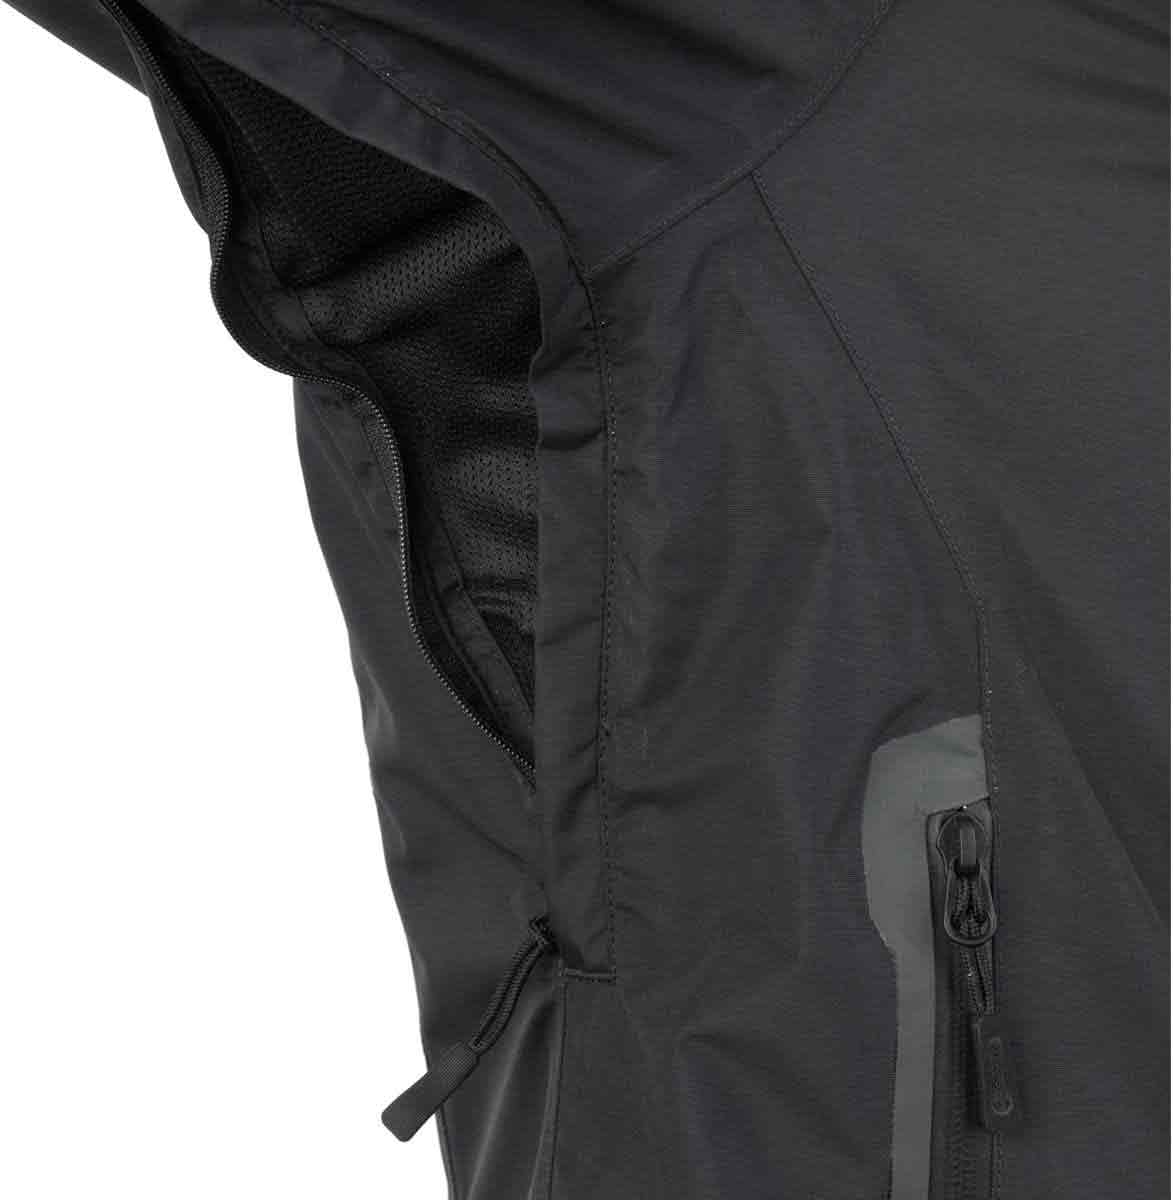 Snugpak Torrent Waterproof Insulated Black Jacket - John Bull Clothing